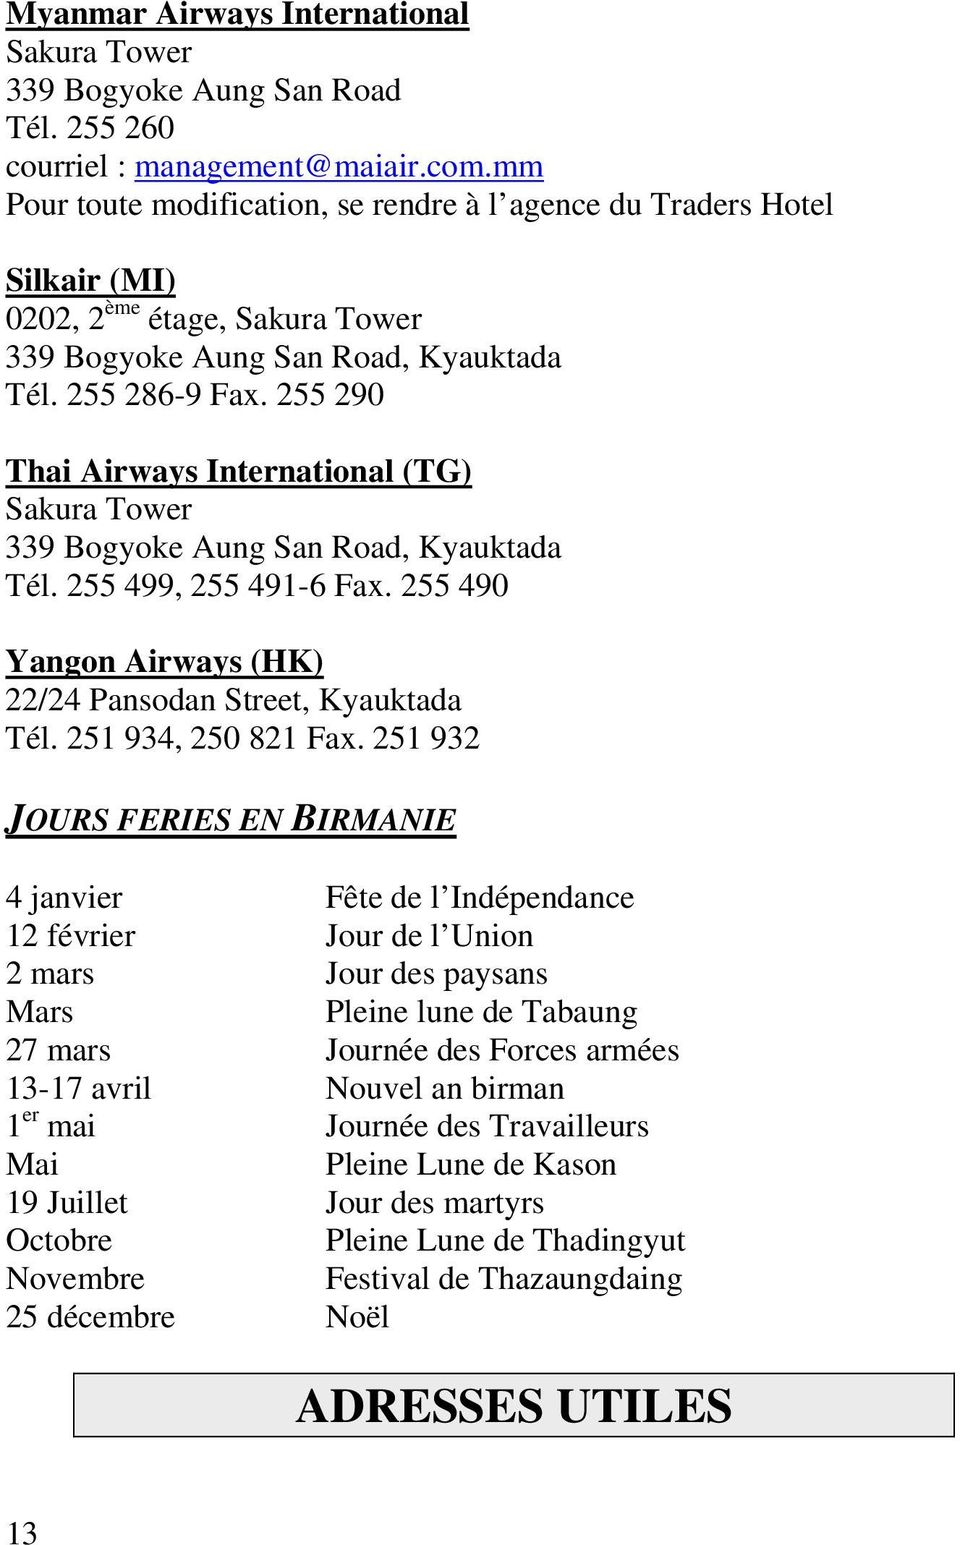 255 290 Thai Airways International (TG) Sakura Tower 339 Bogyoke Aung San Road, Kyauktada Tél. 255 499, 255 491-6 Fax. 255 490 Yangon Airways (HK) 22/24 Pansodan Street, Kyauktada Tél.